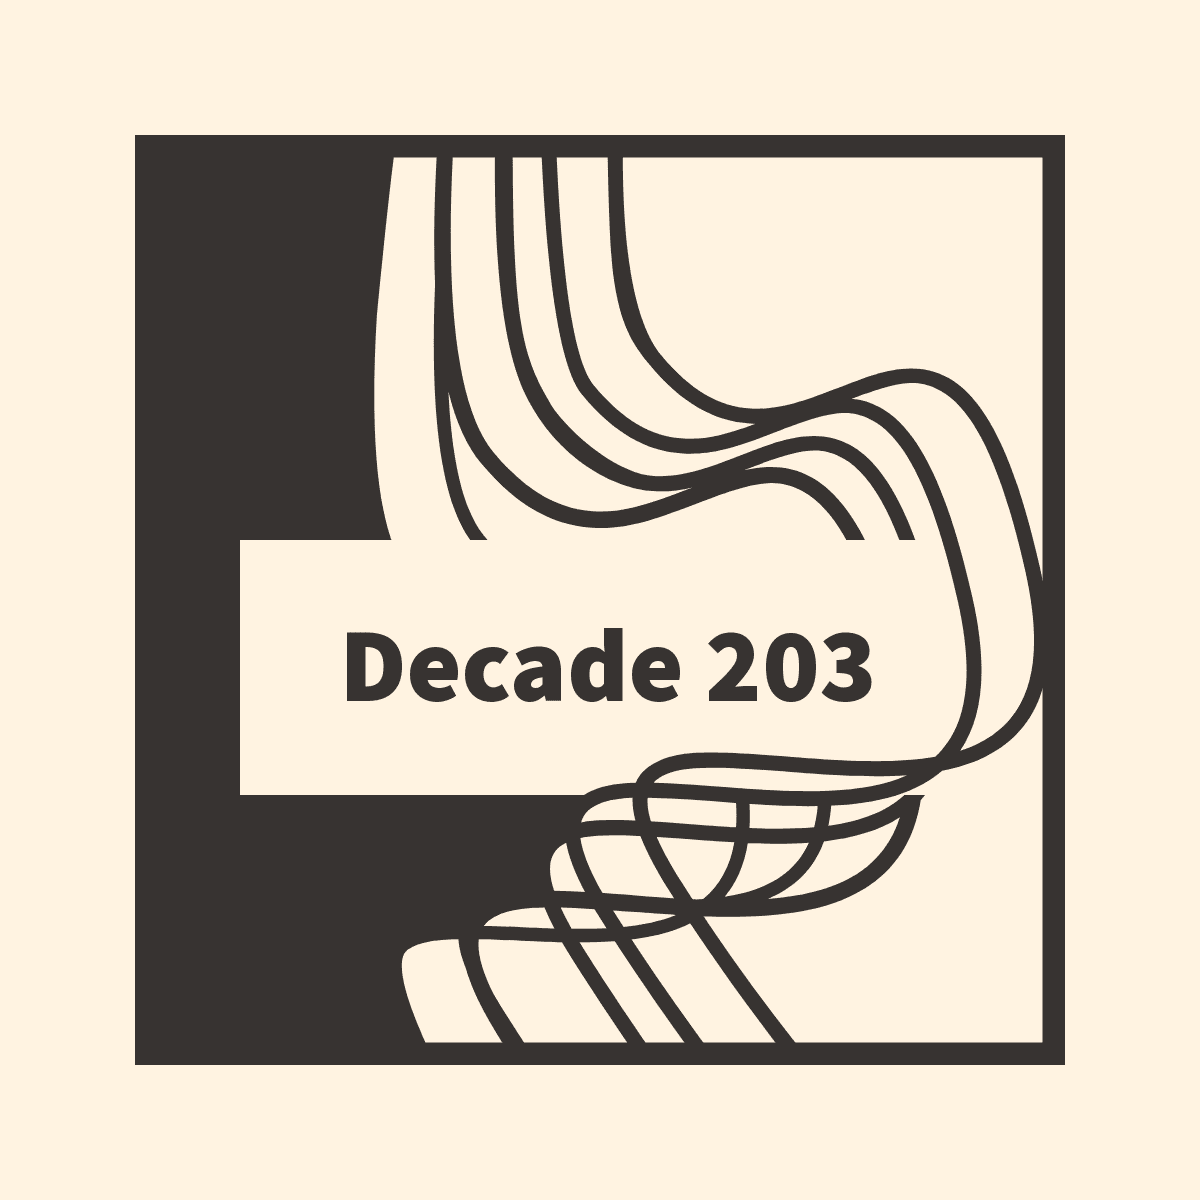 Decade 203